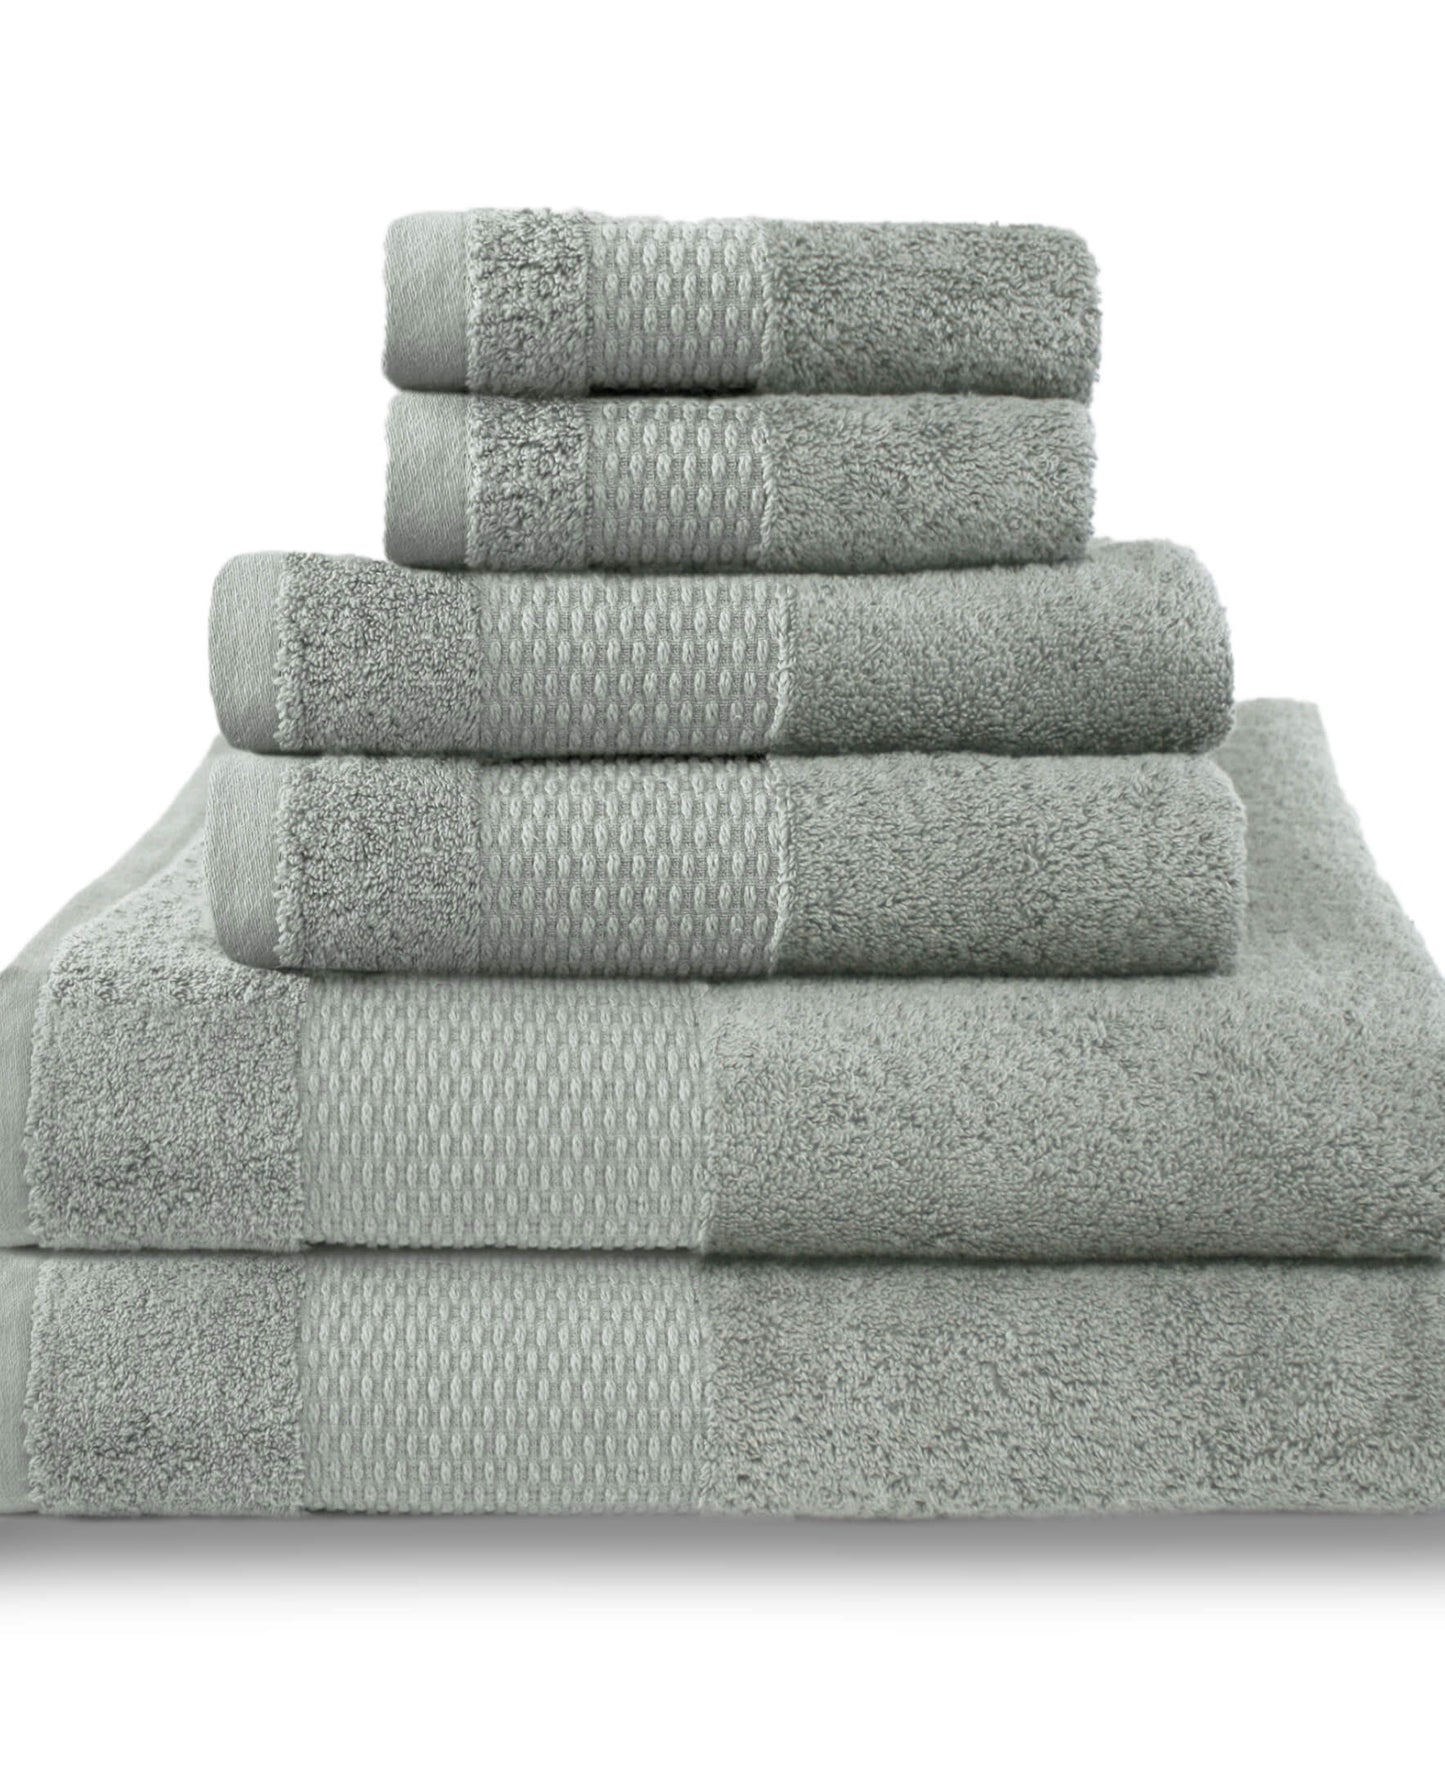 Delilah Home 100% Organic Cotton Towels
Jungle Pillows